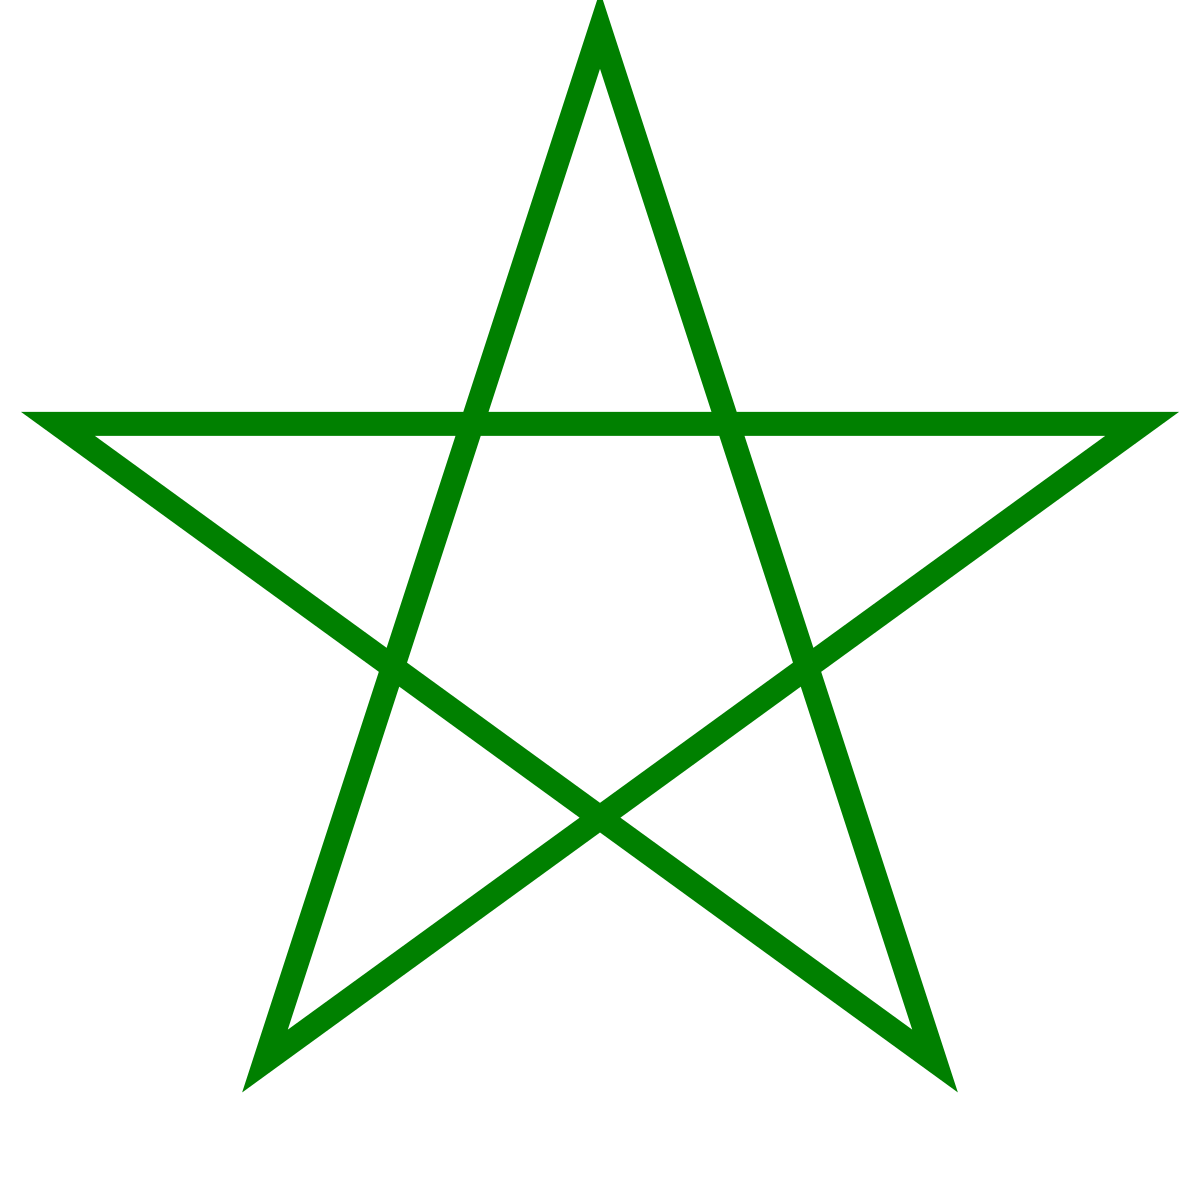 Estrella Figura Geométrica Wikipedia La Enciclopedia Libre